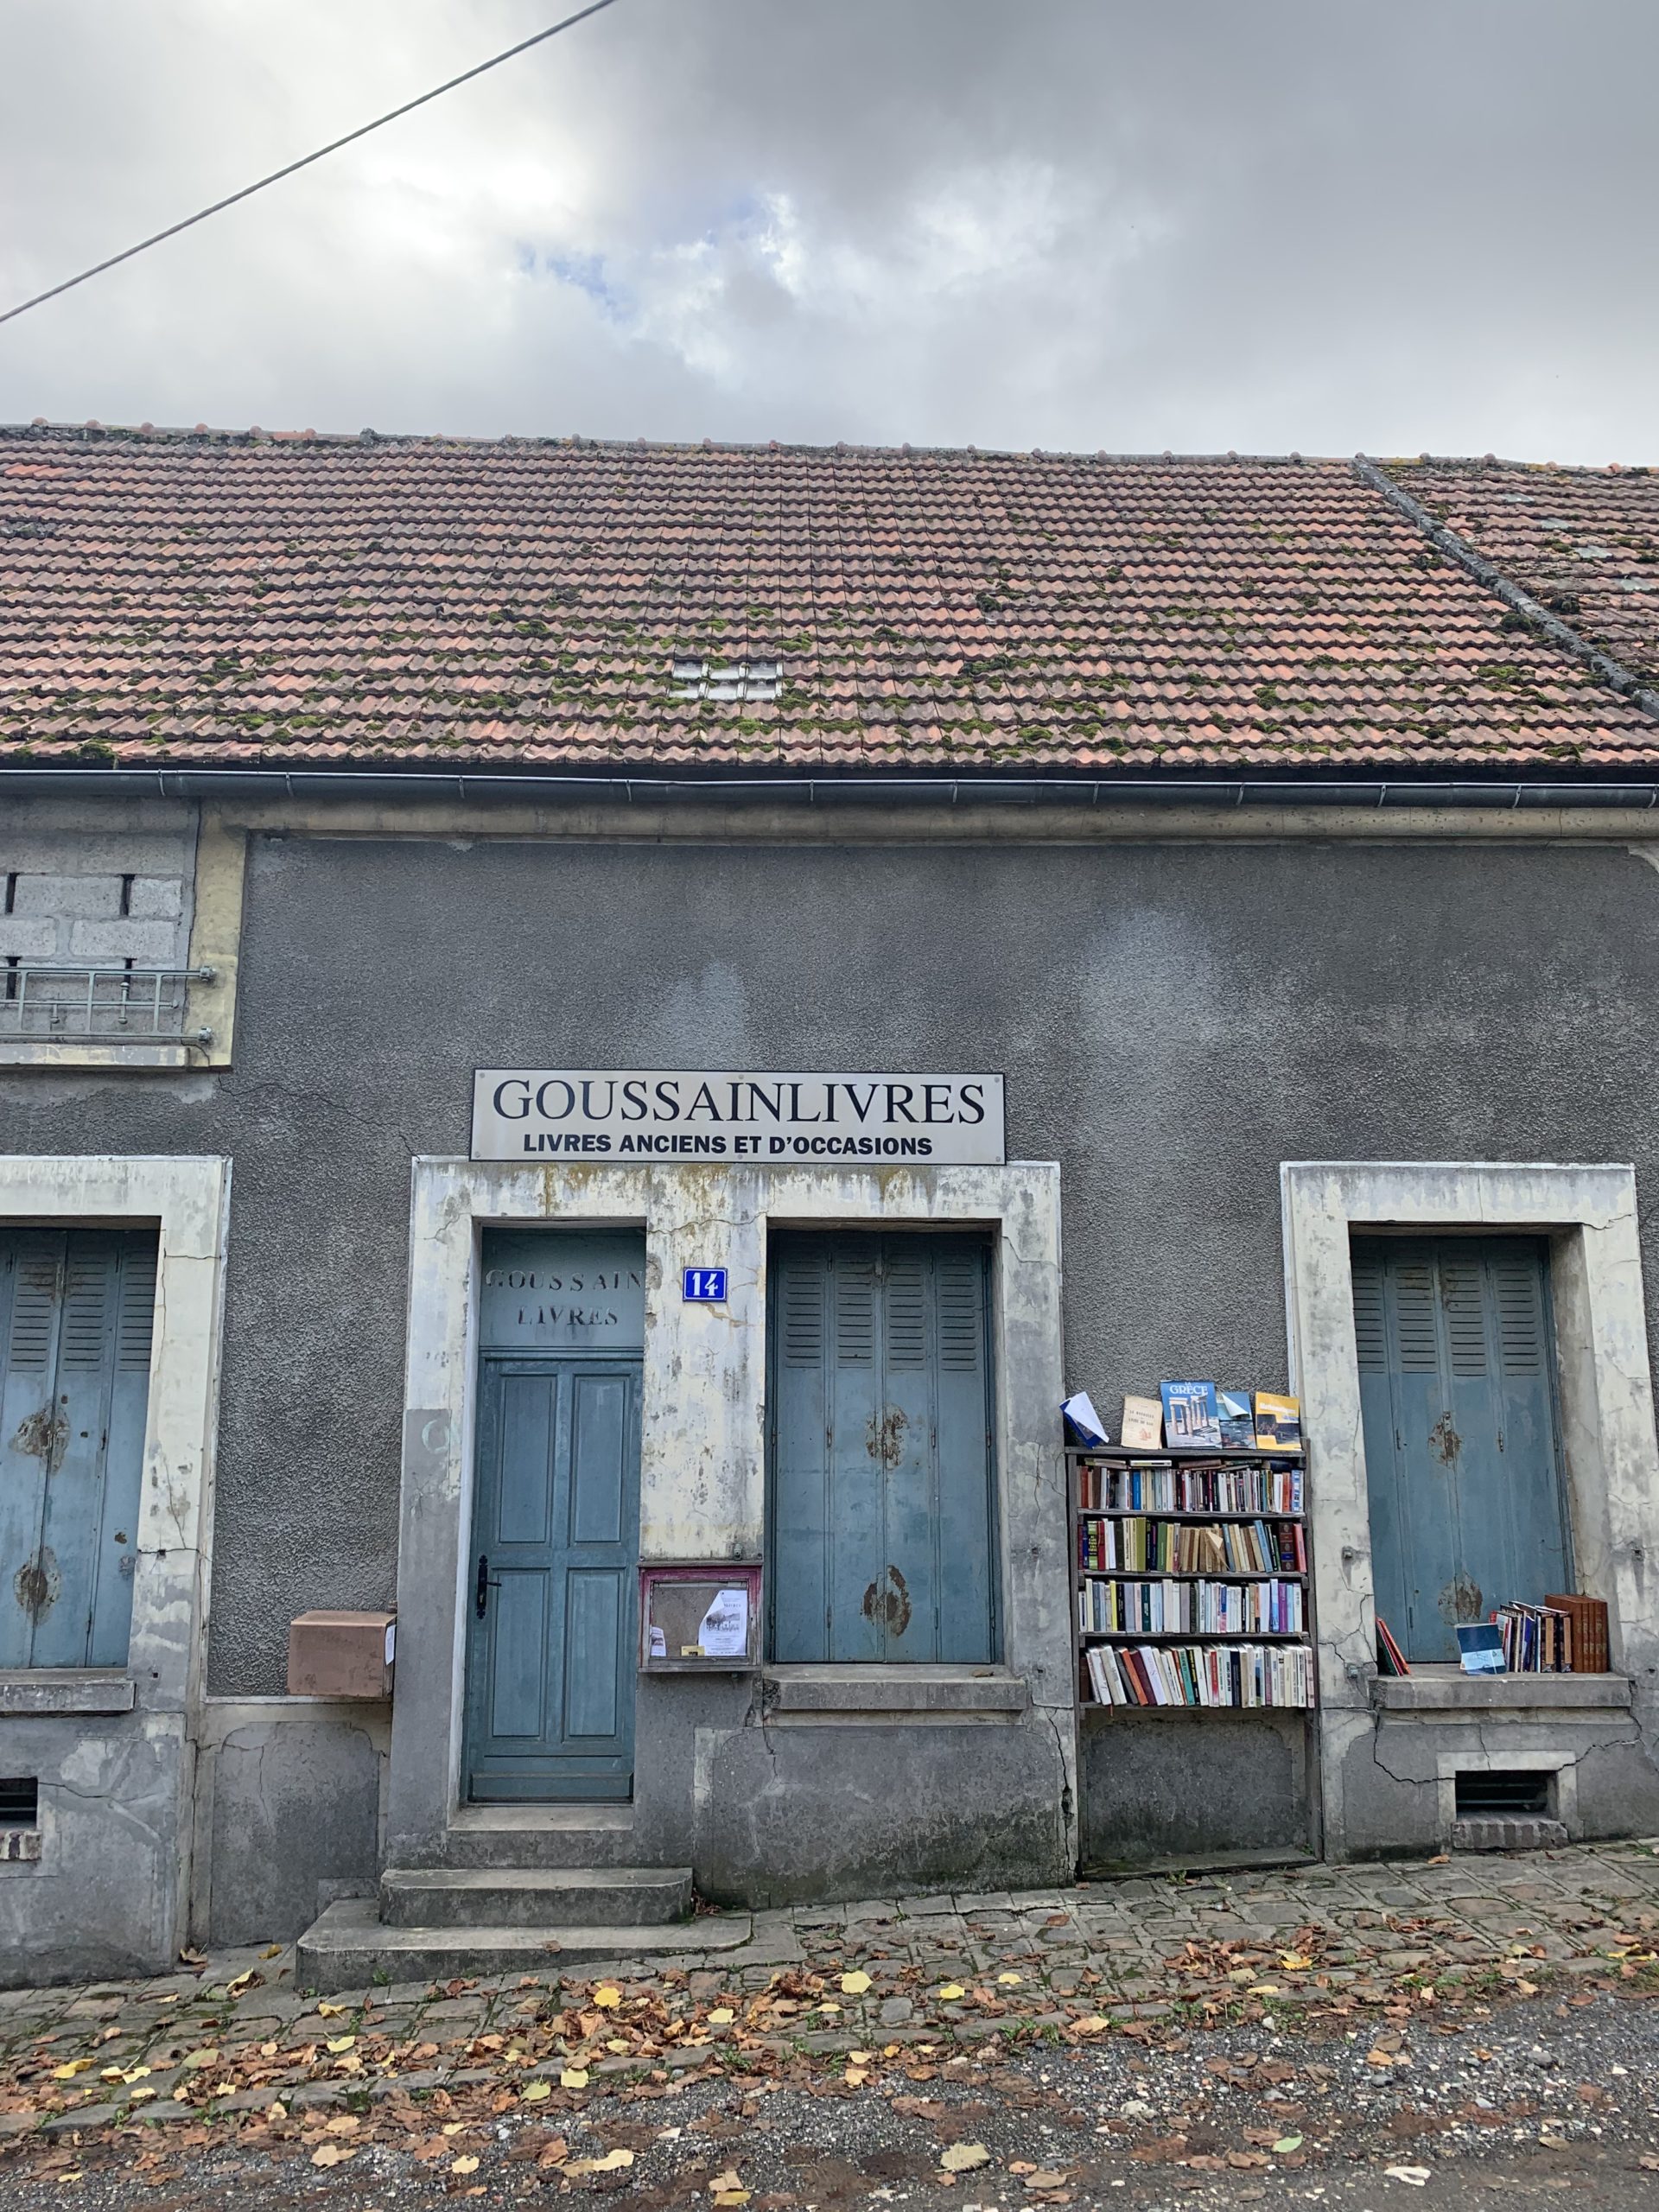 Goussainville, photo de Thomas Blanc